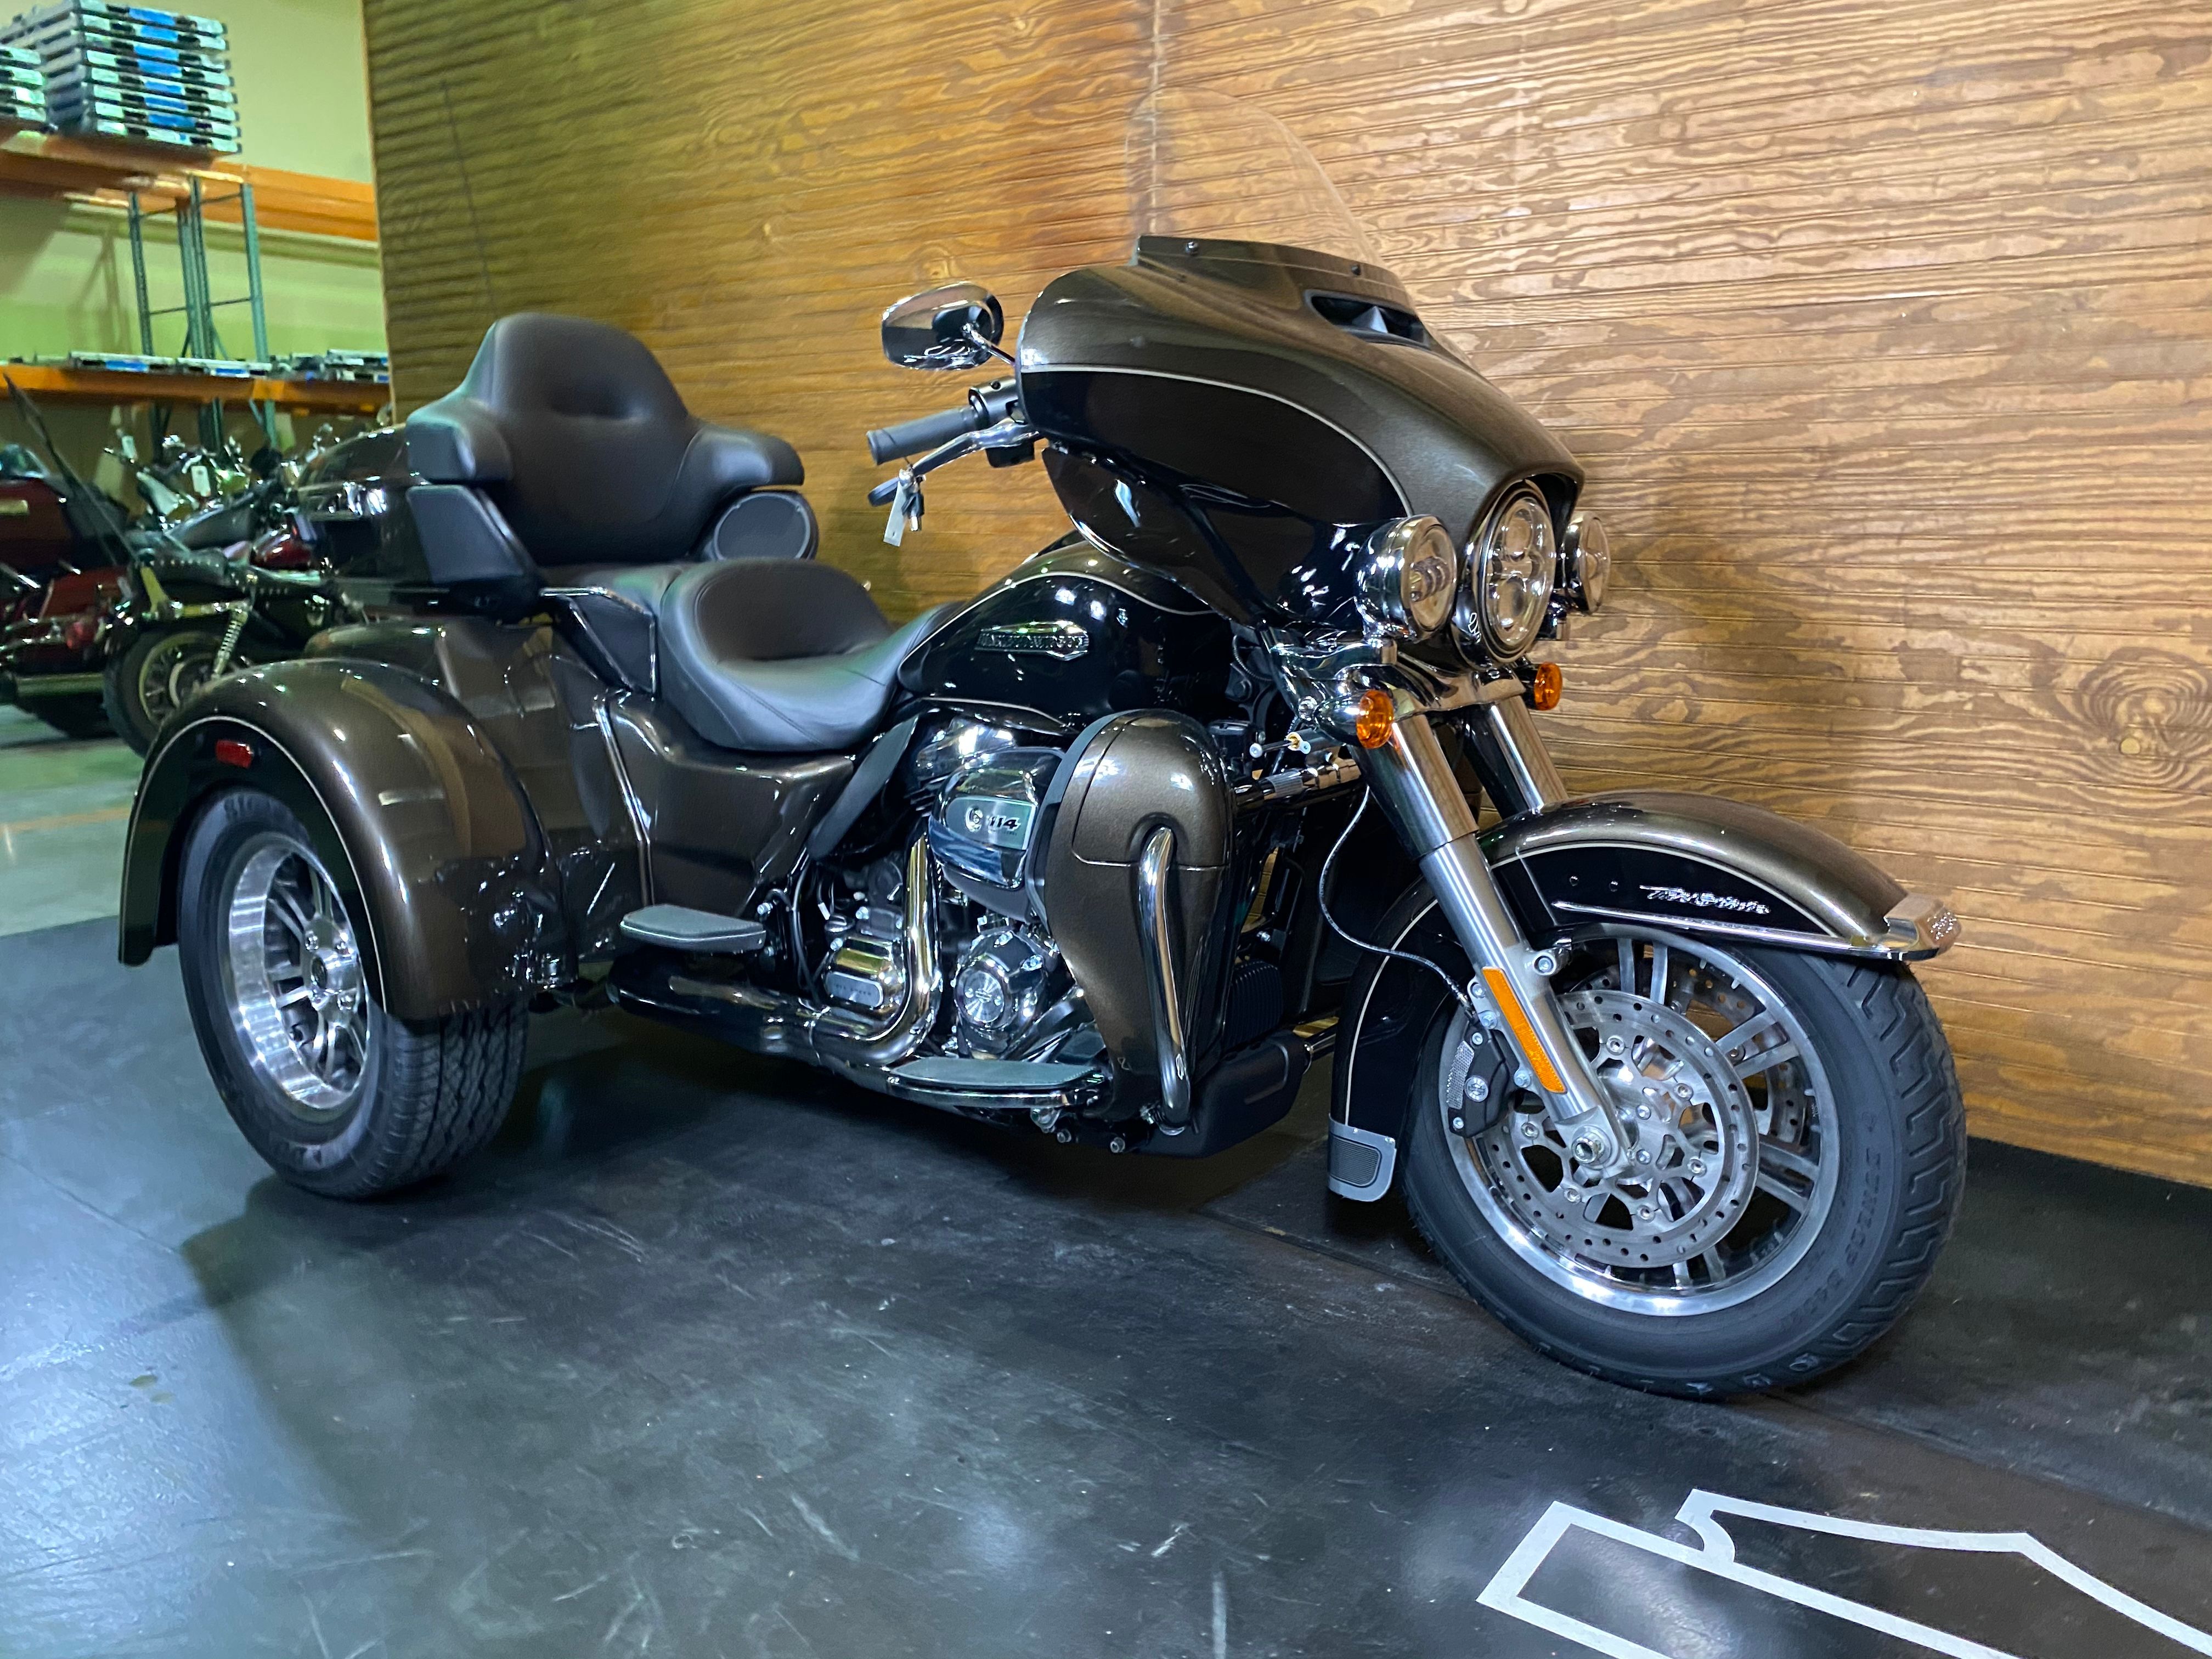 New 2020 Harley-Davidson Tri Glide Ultra in Bowling Green #857379 | Harley-Davidson Bowling Green